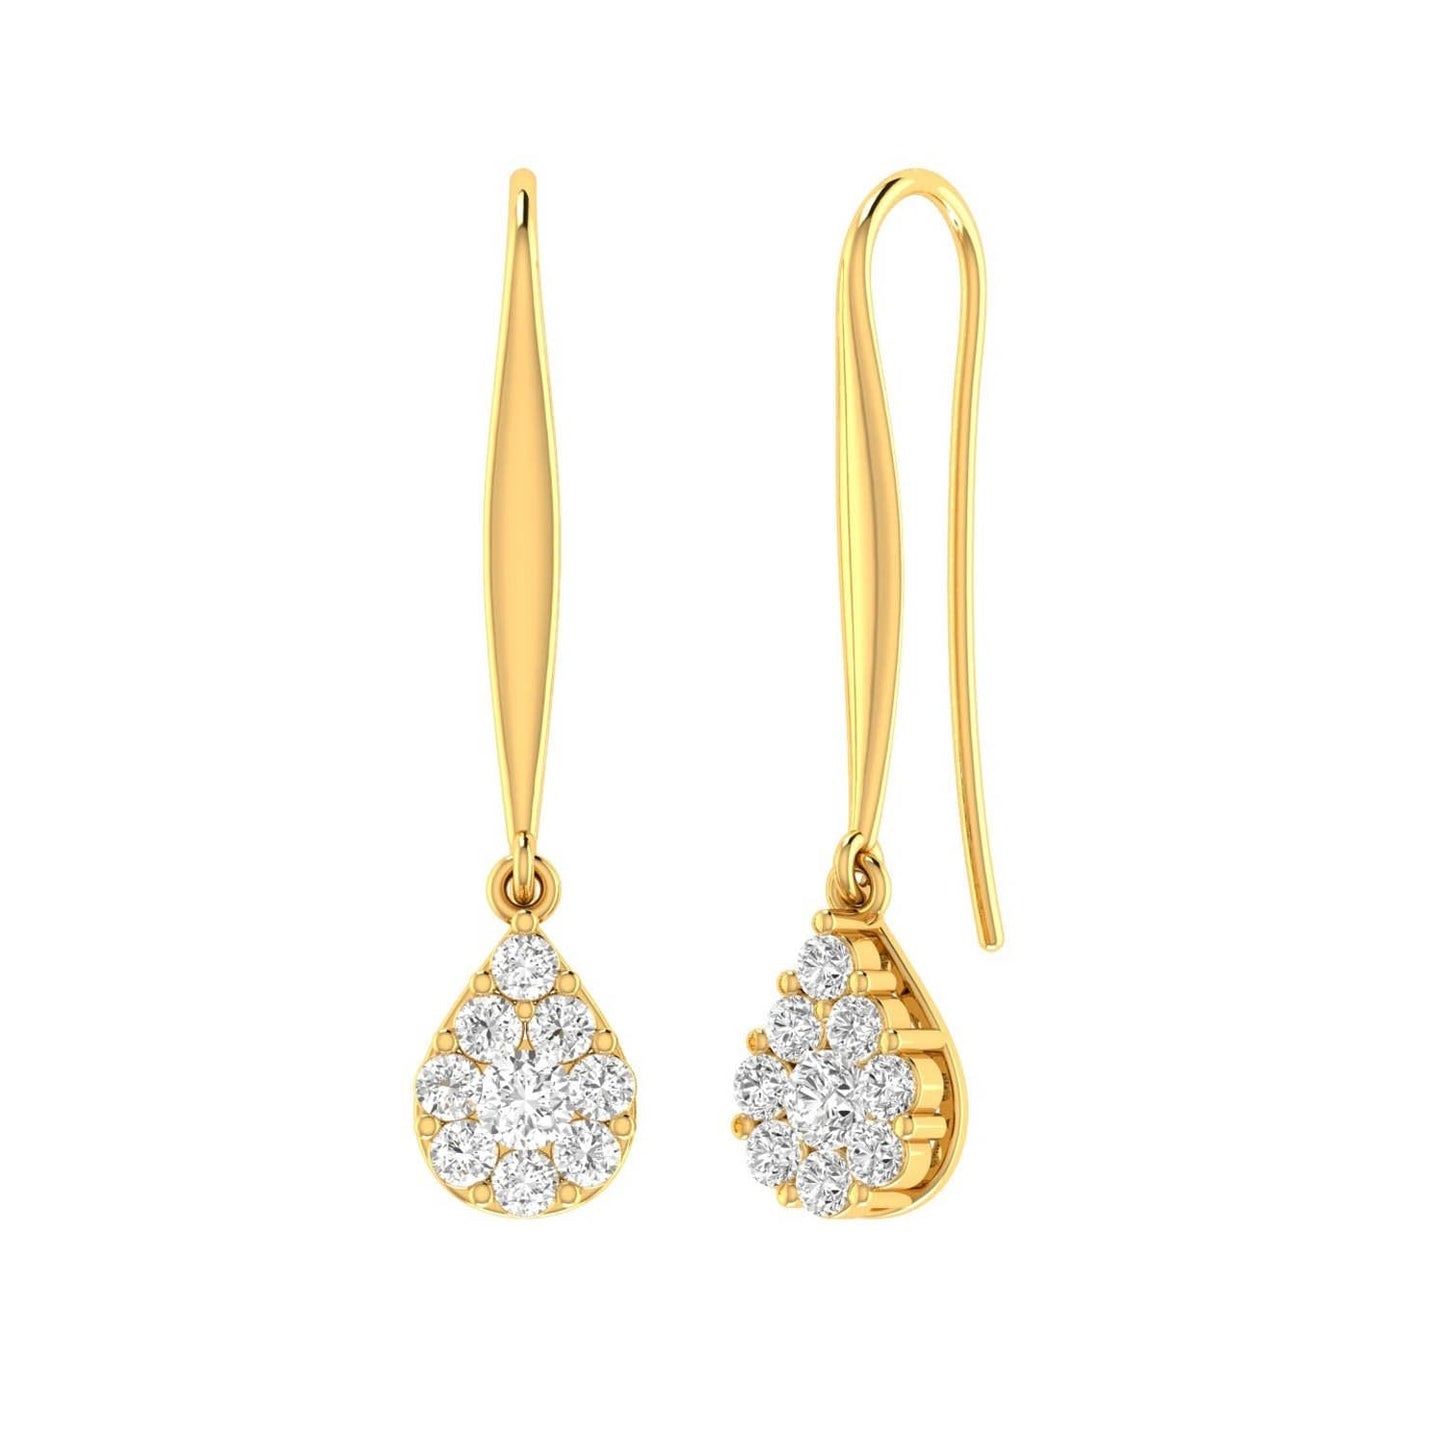 Tear Drop Hook Diamond Earrings with 0.75ct Diamonds in 9K Yellow Gold - 9YTDSH75GH